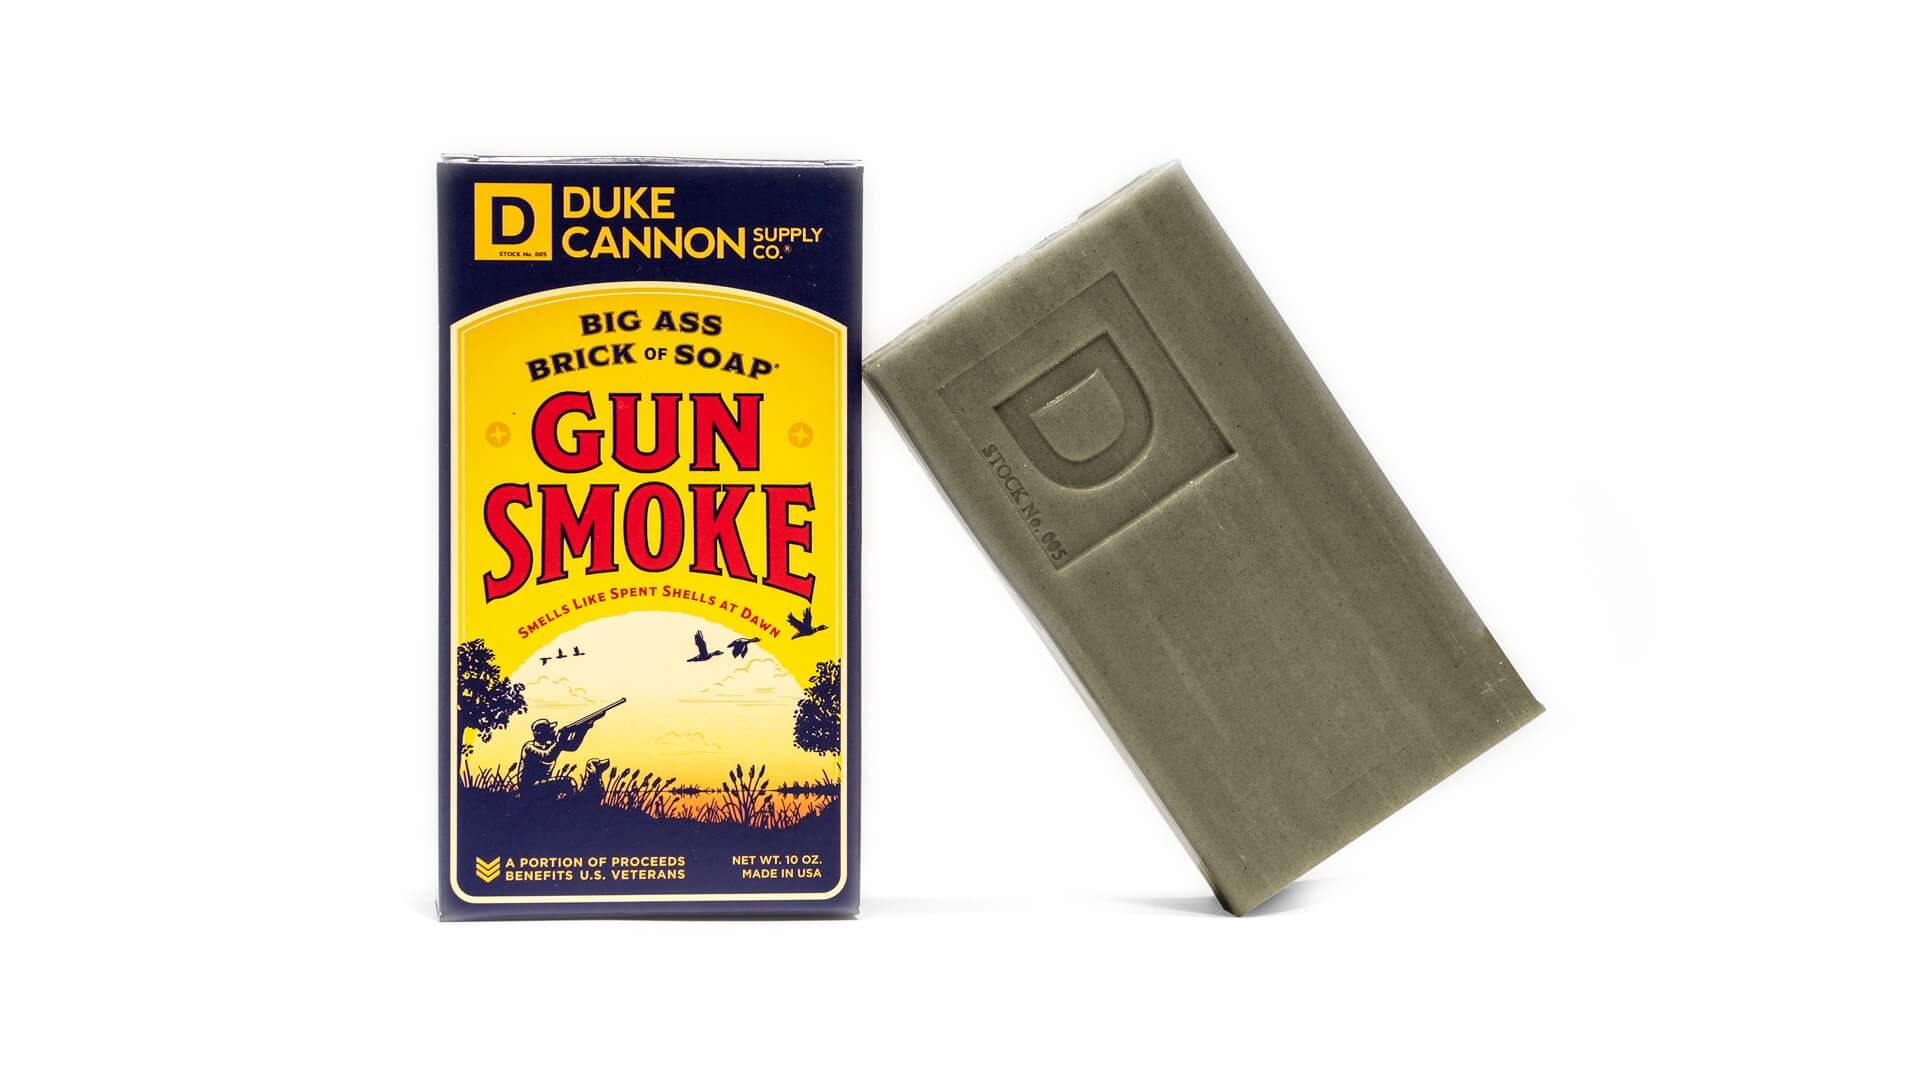 Duke Cannon Big Ass brick of Soap Gun Smoke, Sæbe